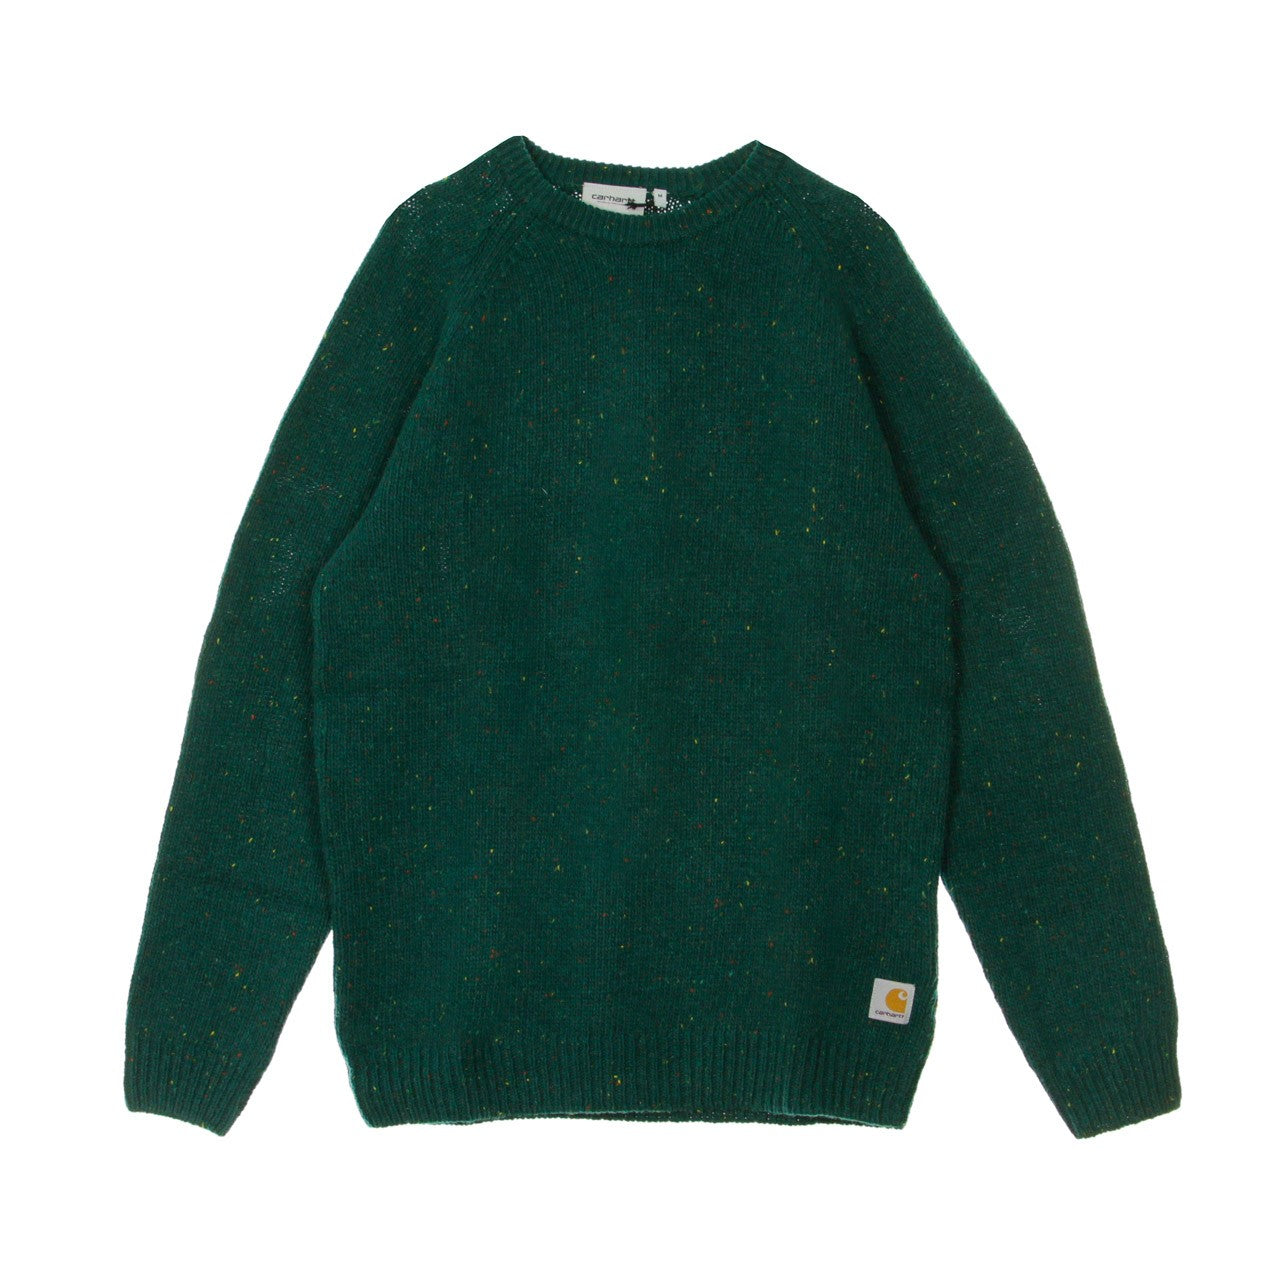 Maglione Uomo Anglistic Sweater Dark Fir Heather I010977